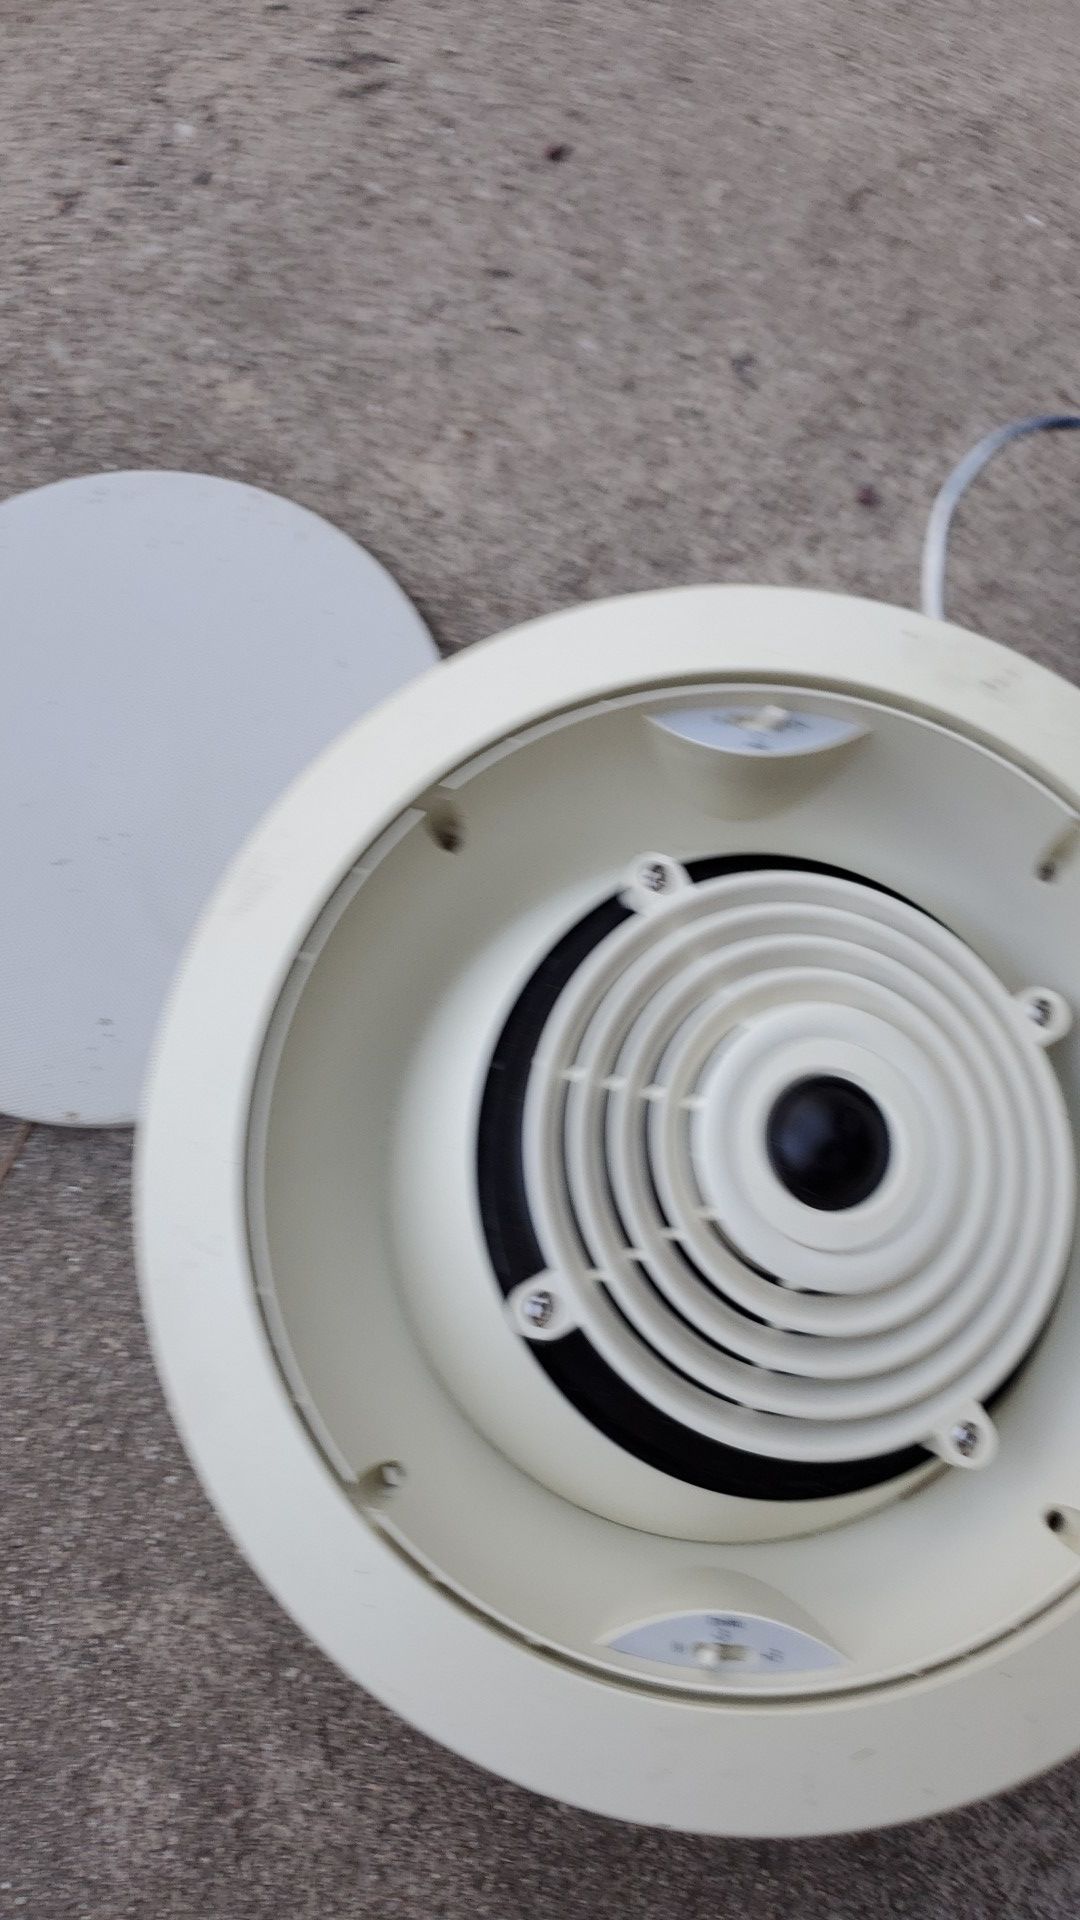 SpeakerCraft flush mount ceiling speakers